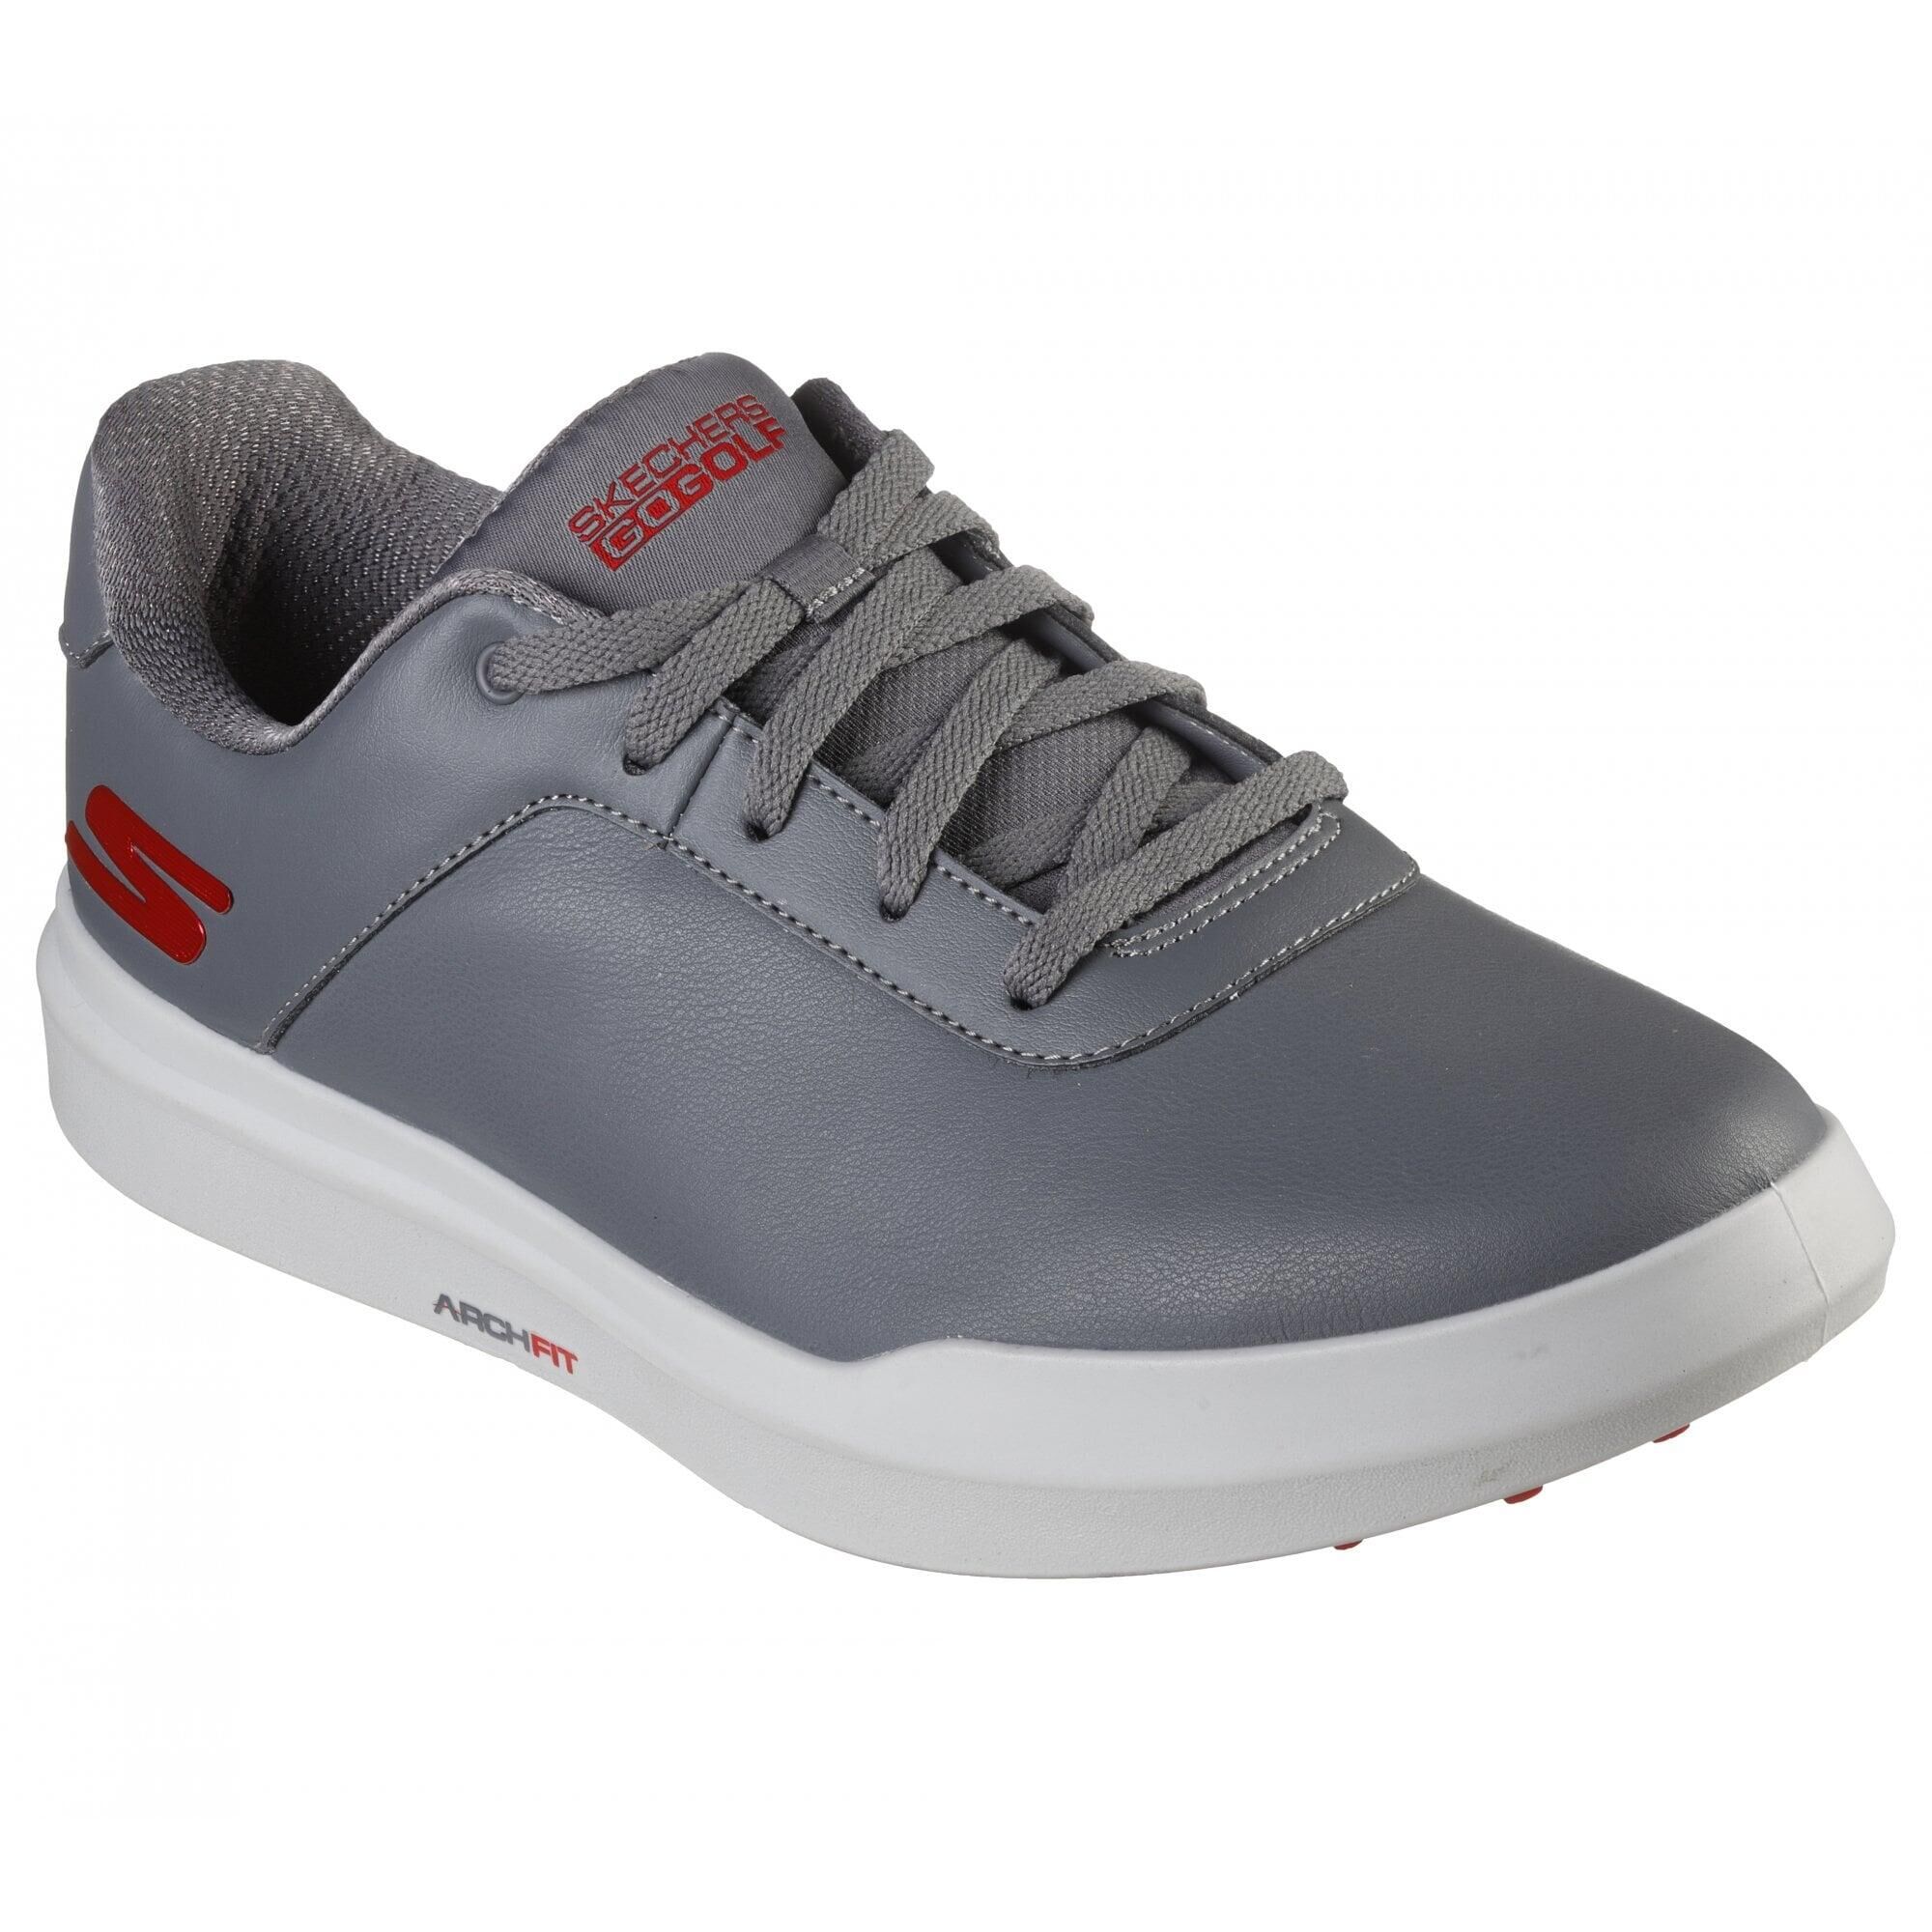 SKECHERS Skechers GO GOLF DRIVE 5 Golf Shoes - Grey/Red